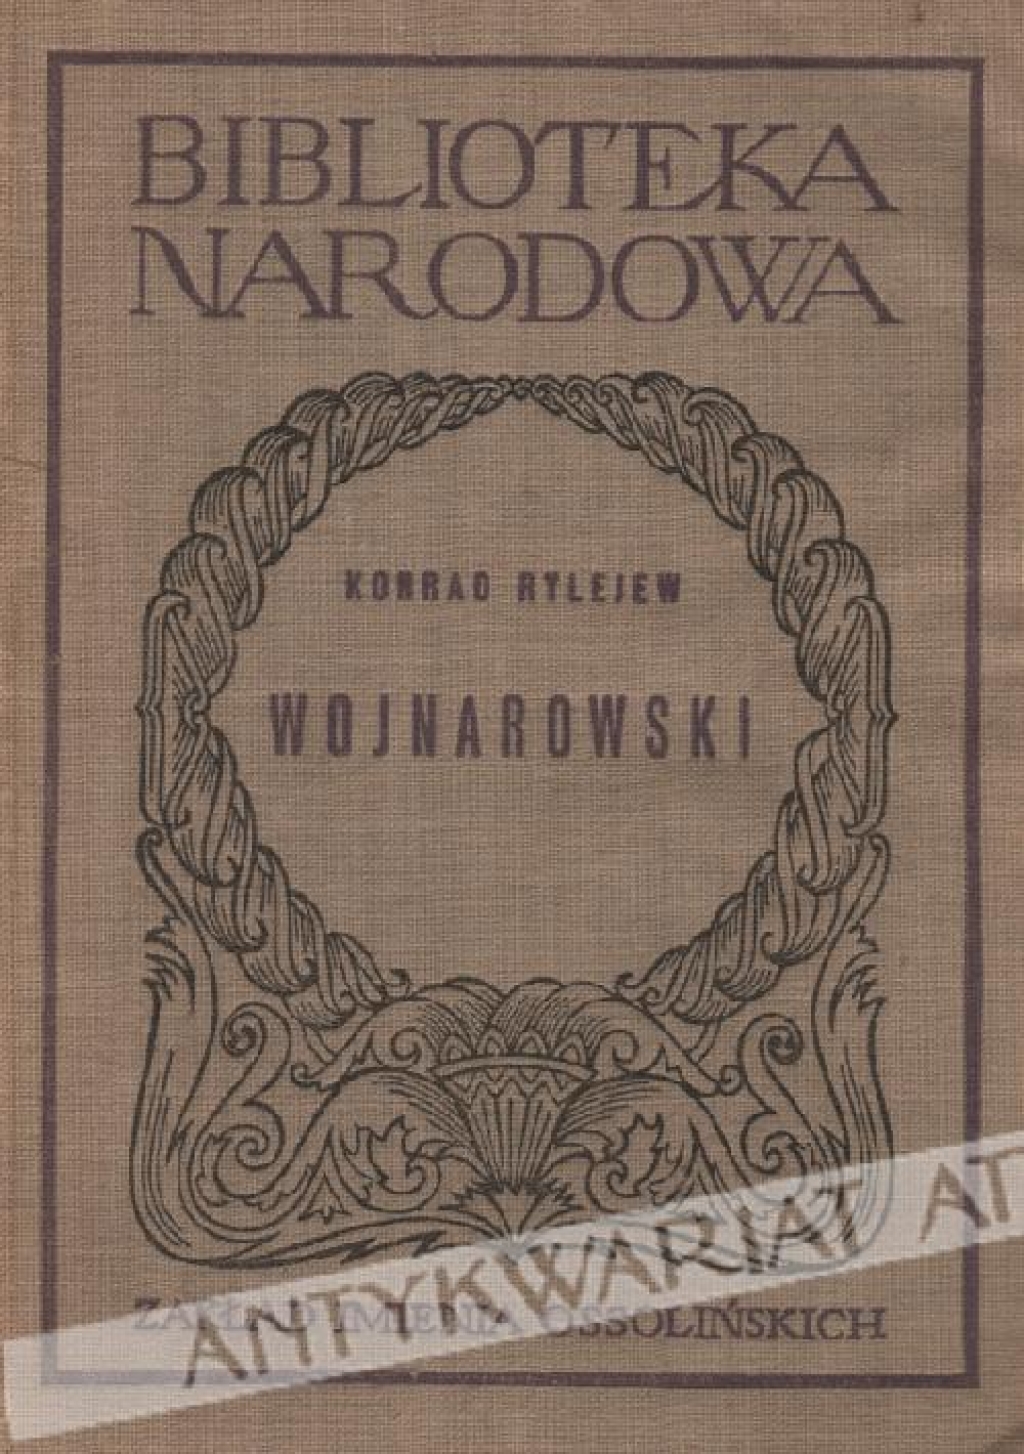 Wojnarowski